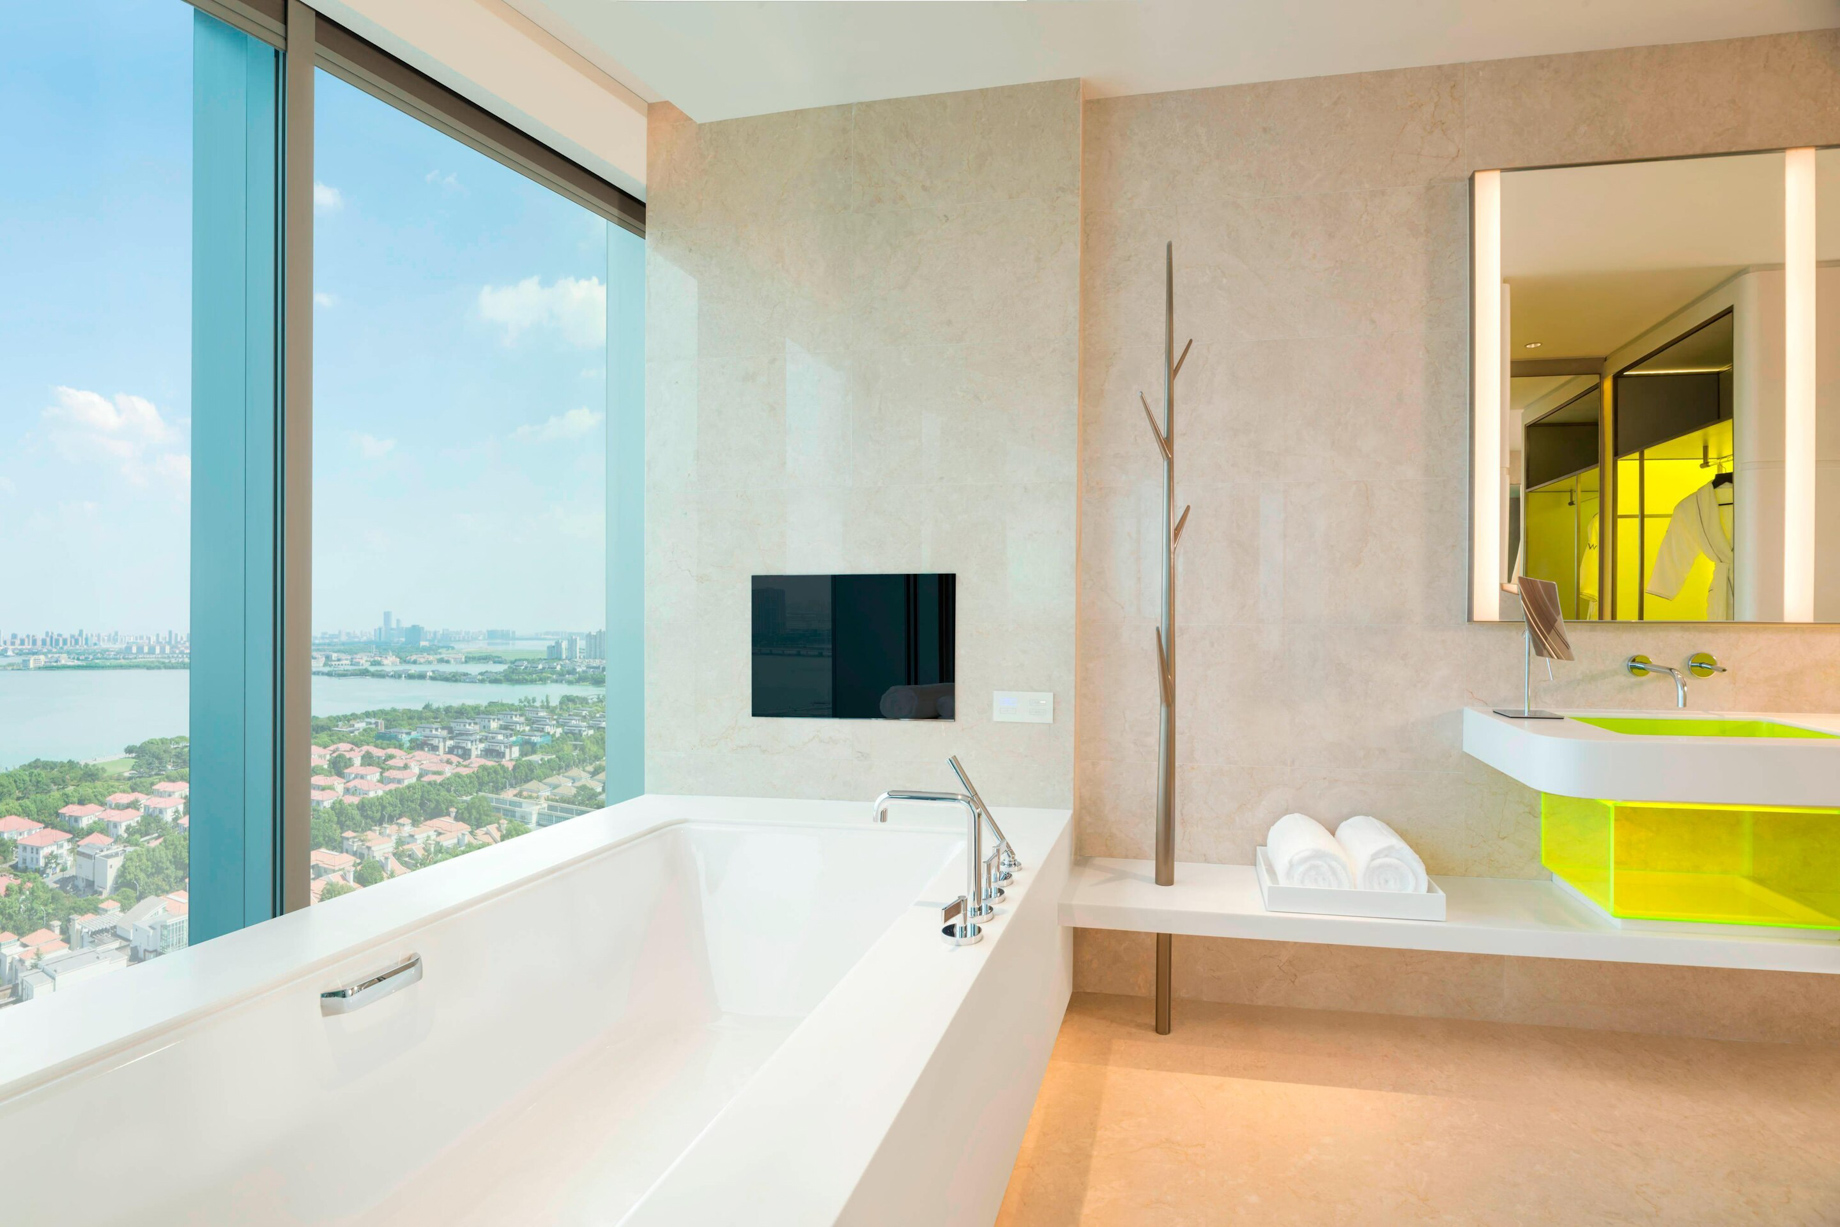 W Suzhou Hotel – Suzhou, China – Wonderful Guest Bathroom Tub